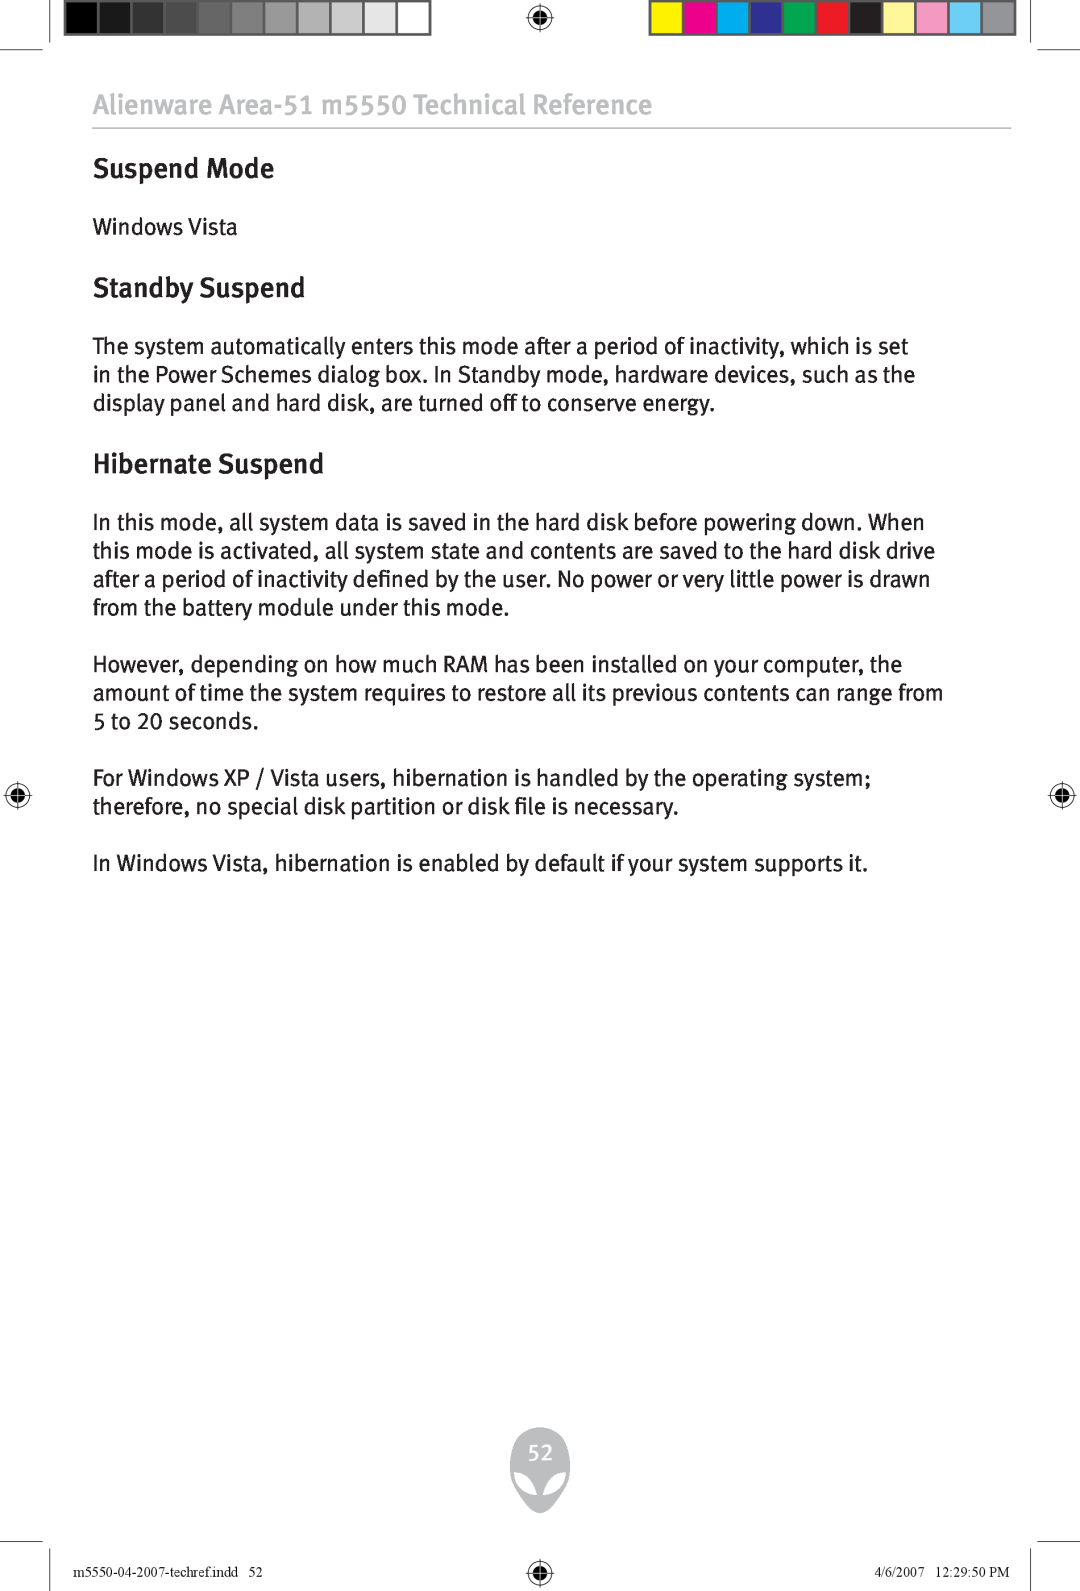 Alienware user manual Suspend Mode, Alienware Area-51 m5550 Technical Reference, Standby Suspend, Hibernate Suspend 